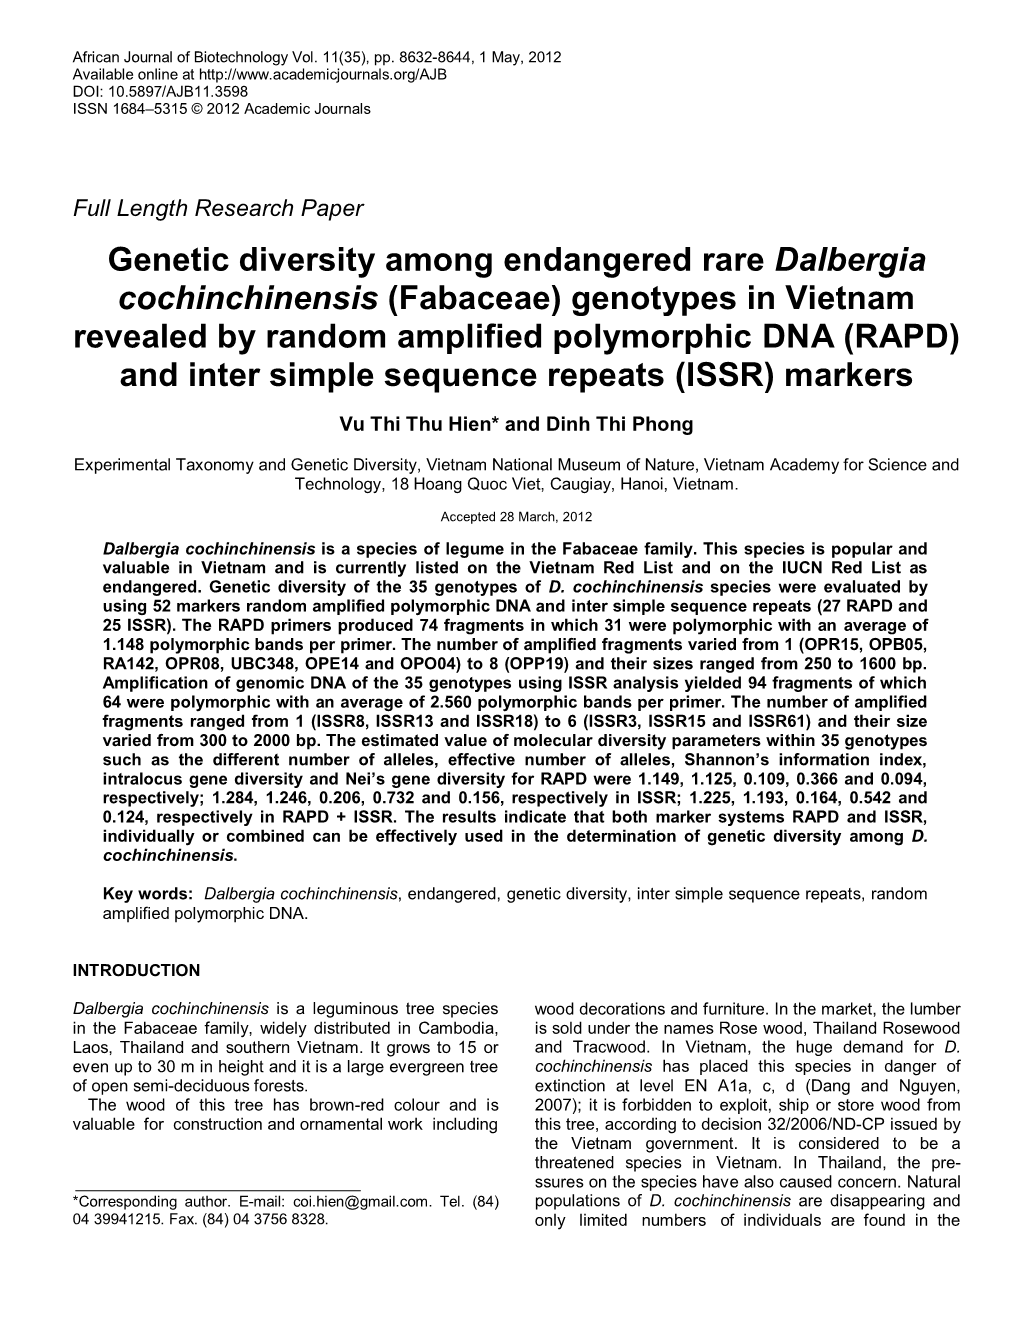 Genetic Diversity Among Endangered Rare Dalbergia Cochinchinensis